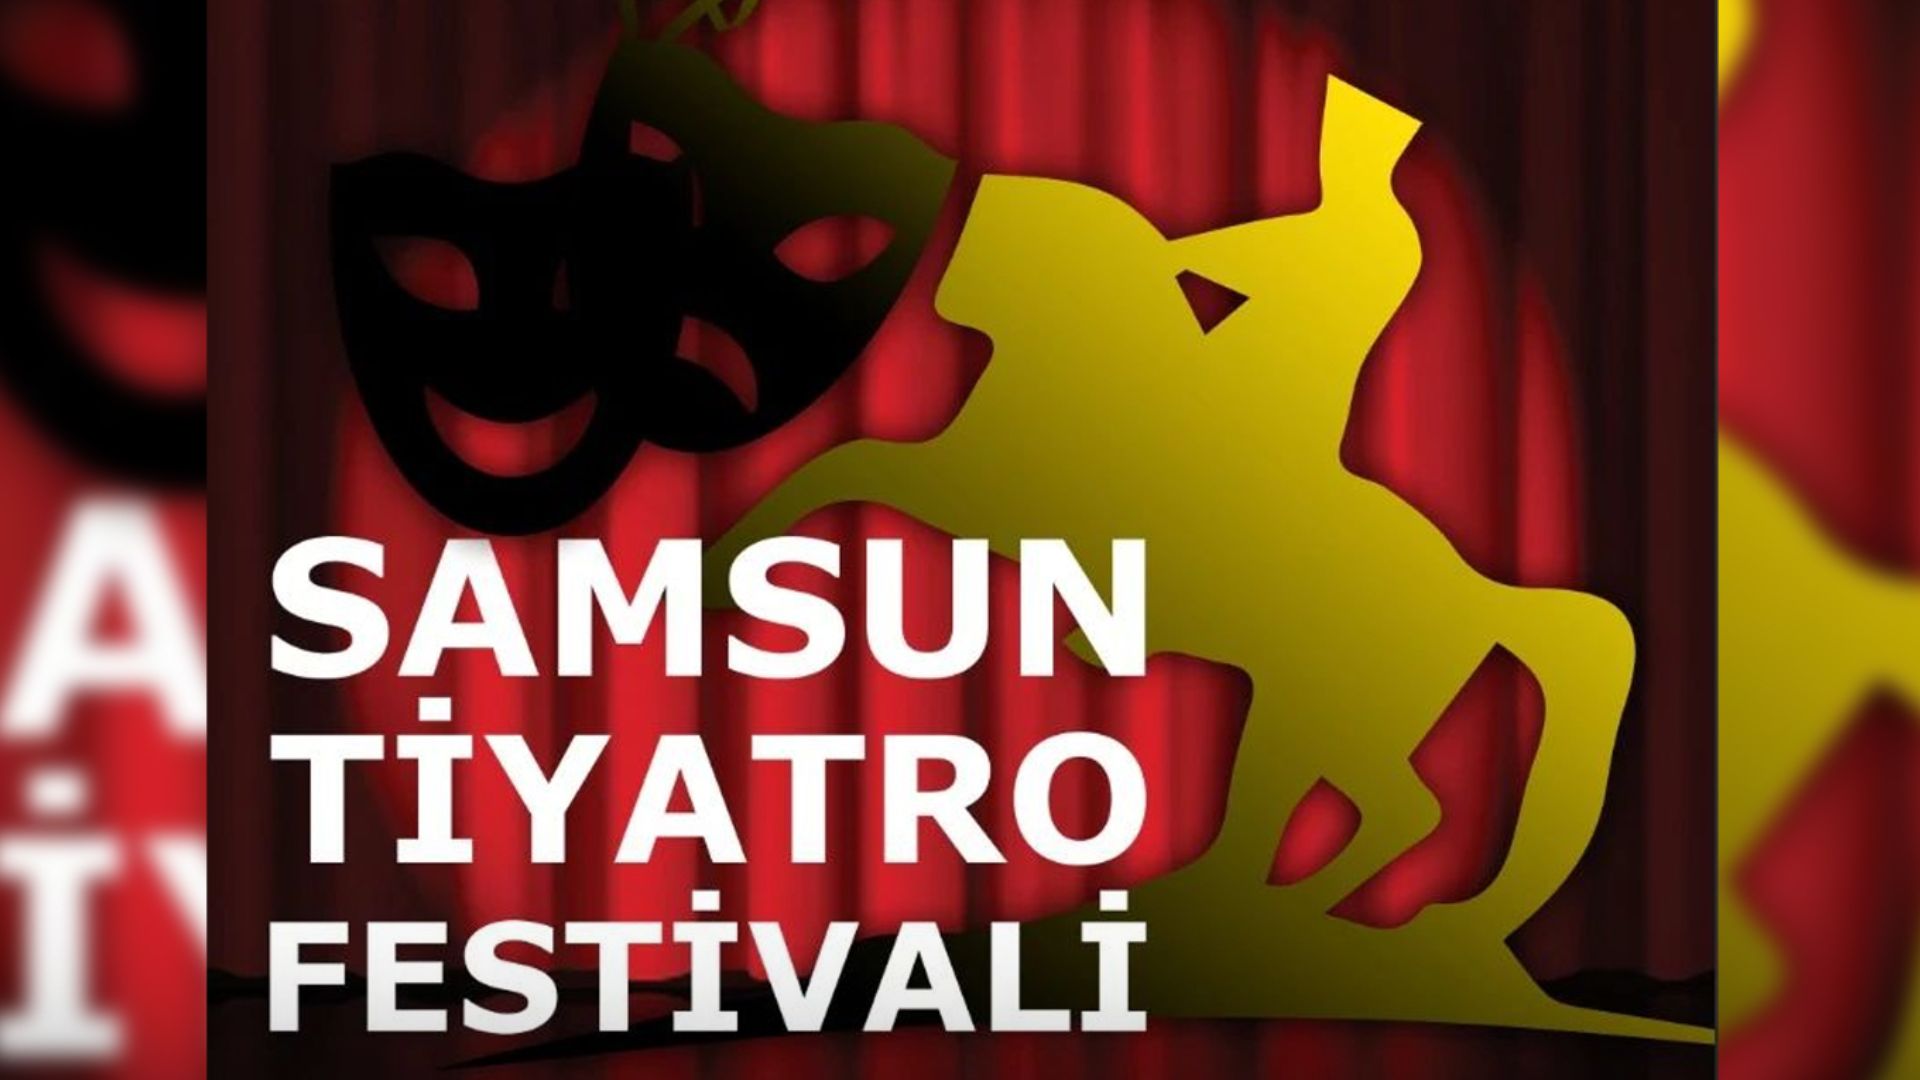 Samsun Tiyatro Festivali 2022 festival